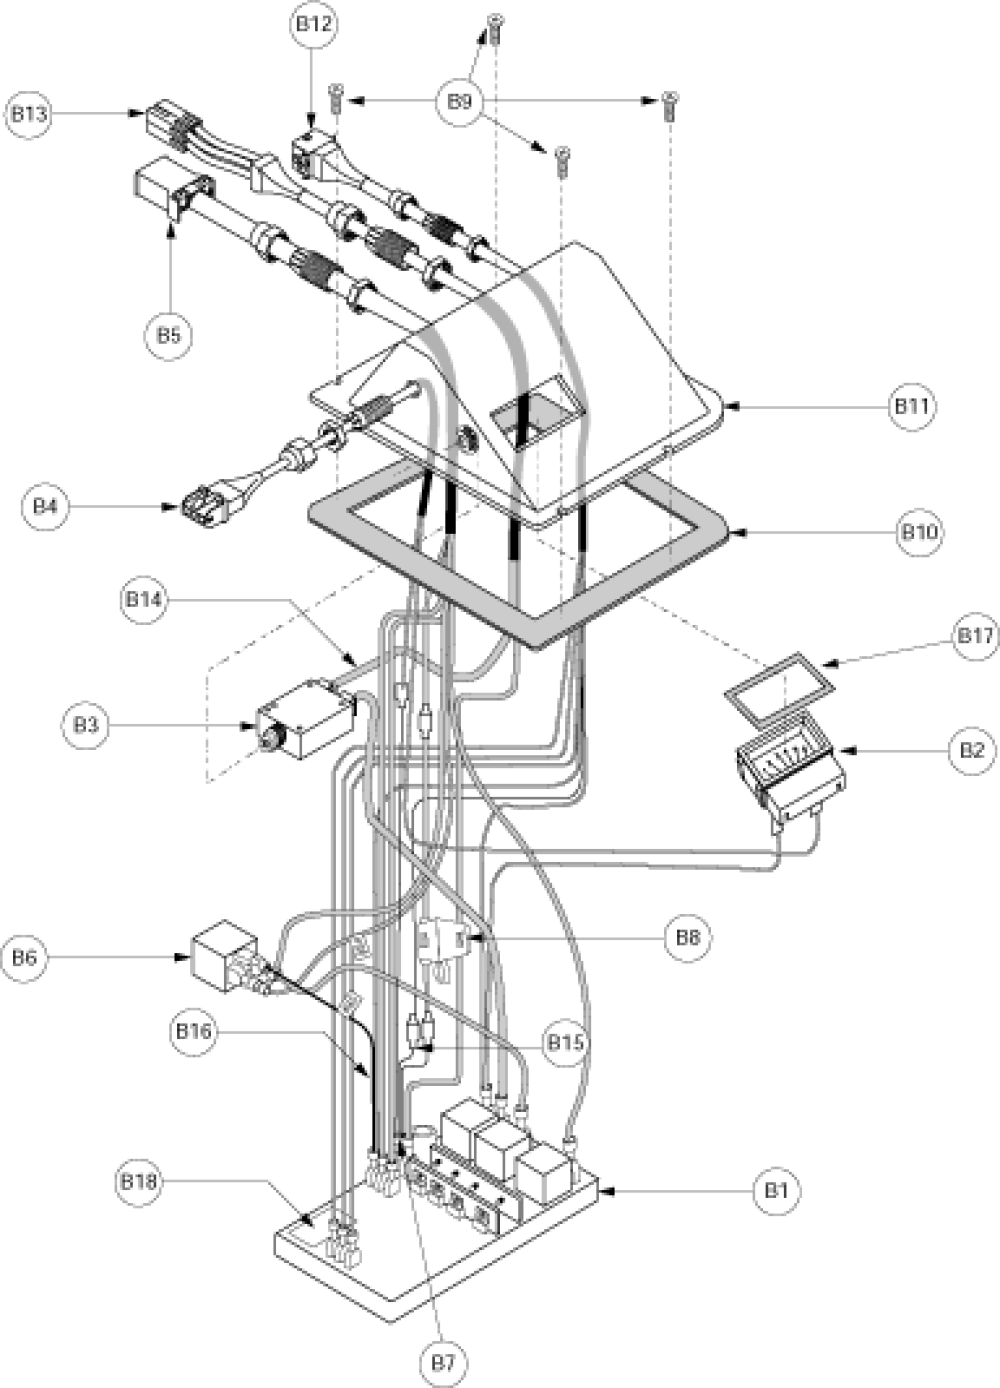 Electronics Assembly - Rear4 parts diagram